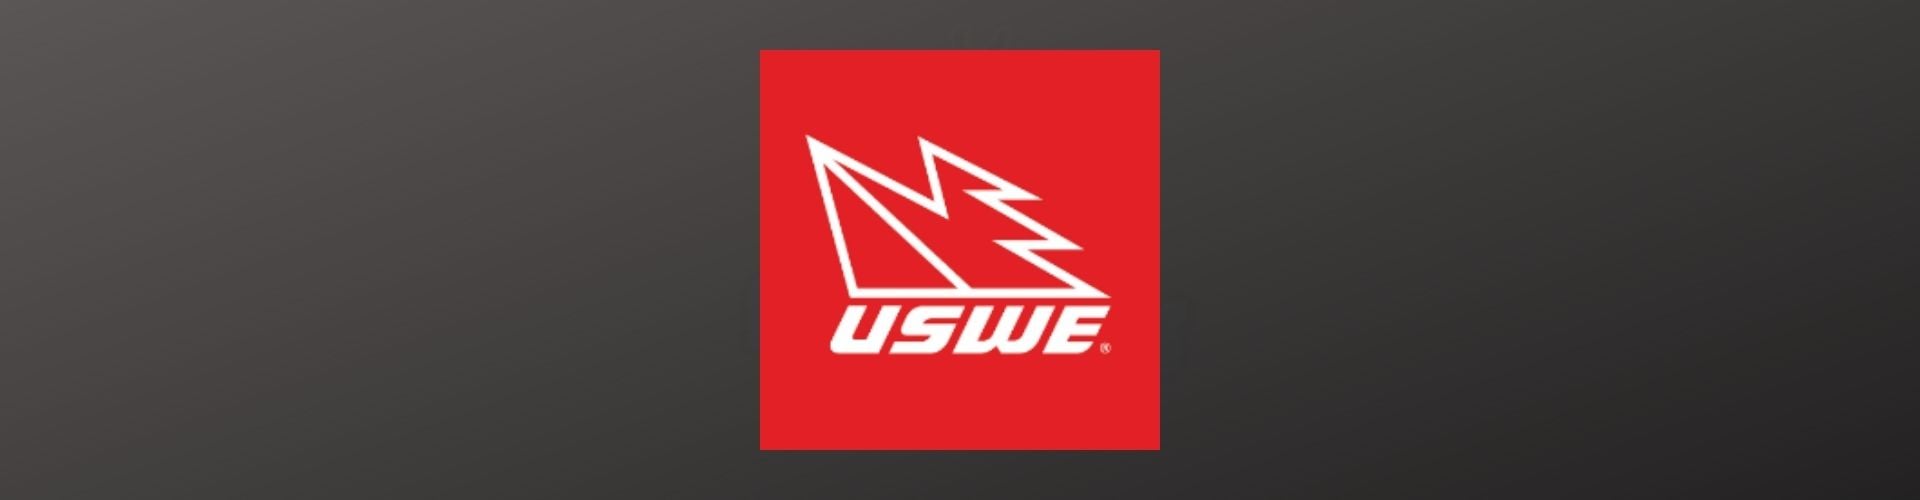 USWE Brand Category